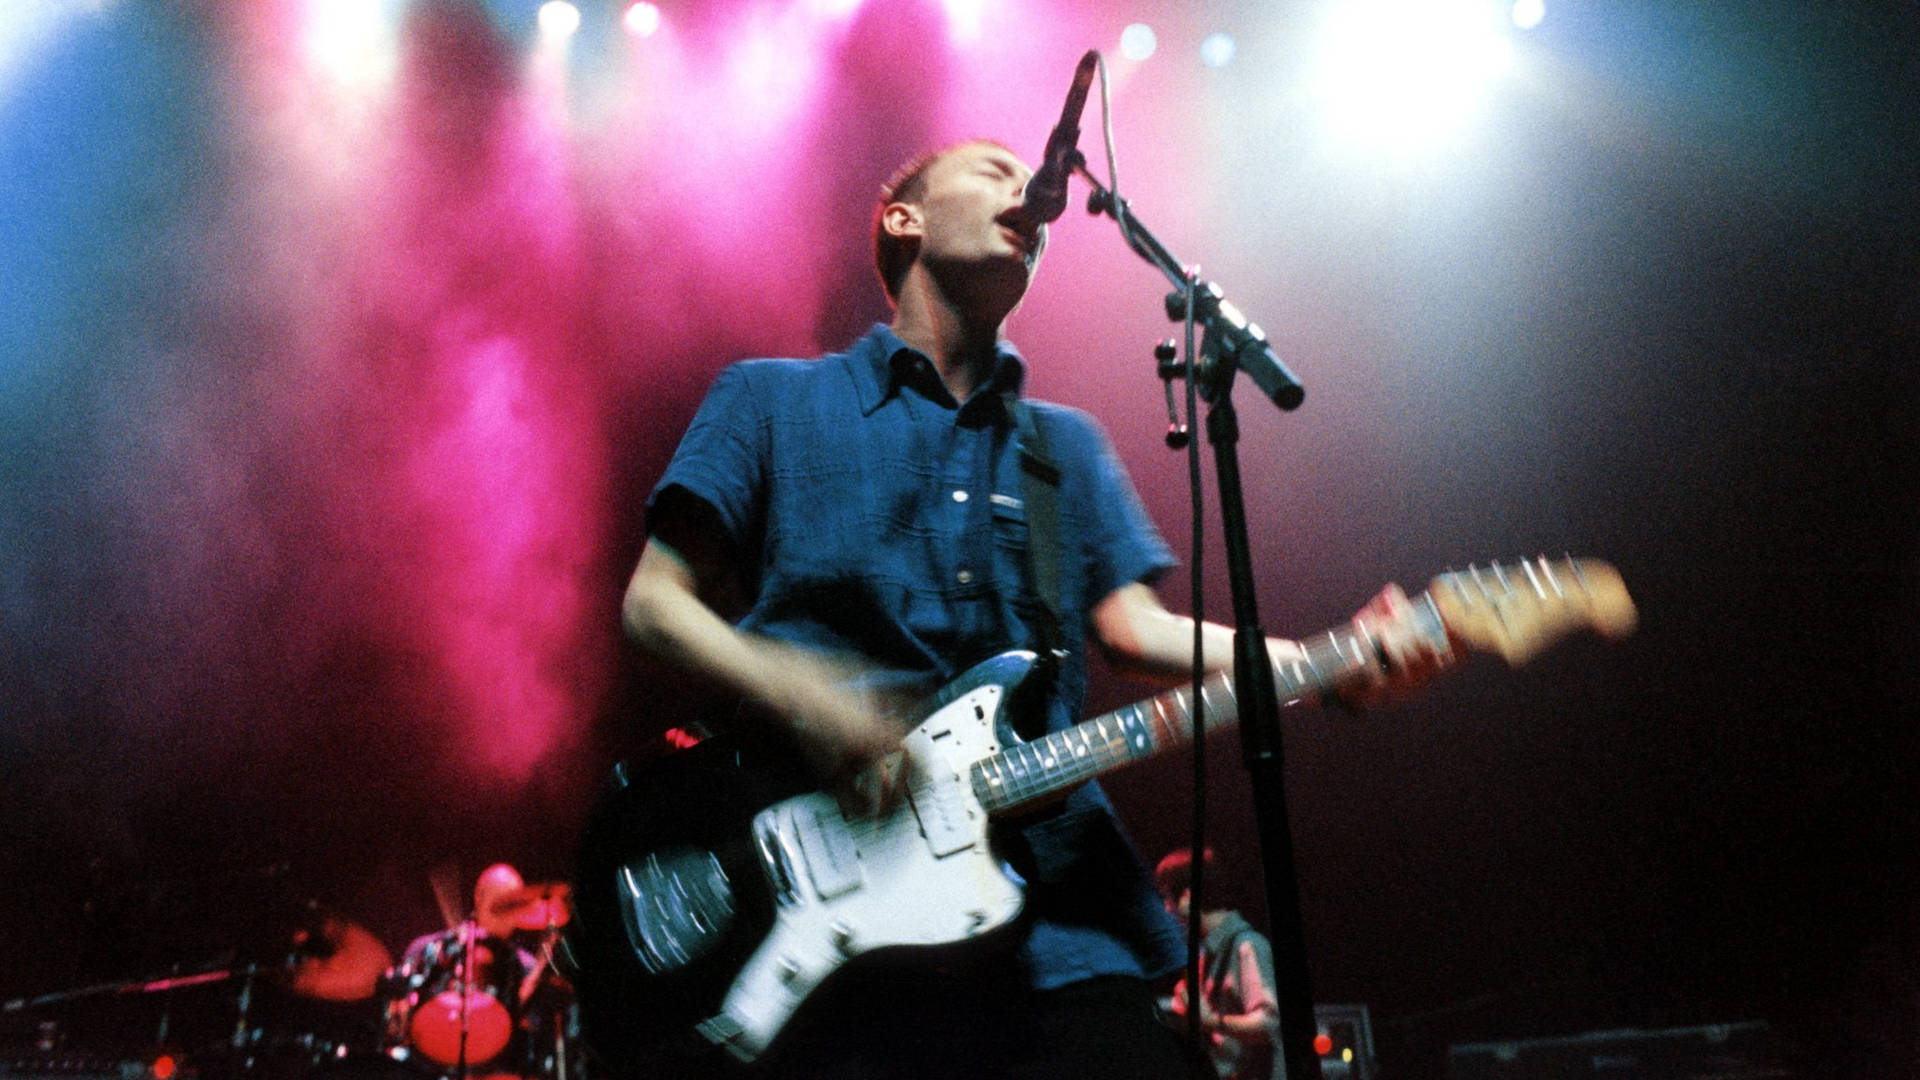 Download Radiohead Thom Yorke In Live Performance Wallpaper 